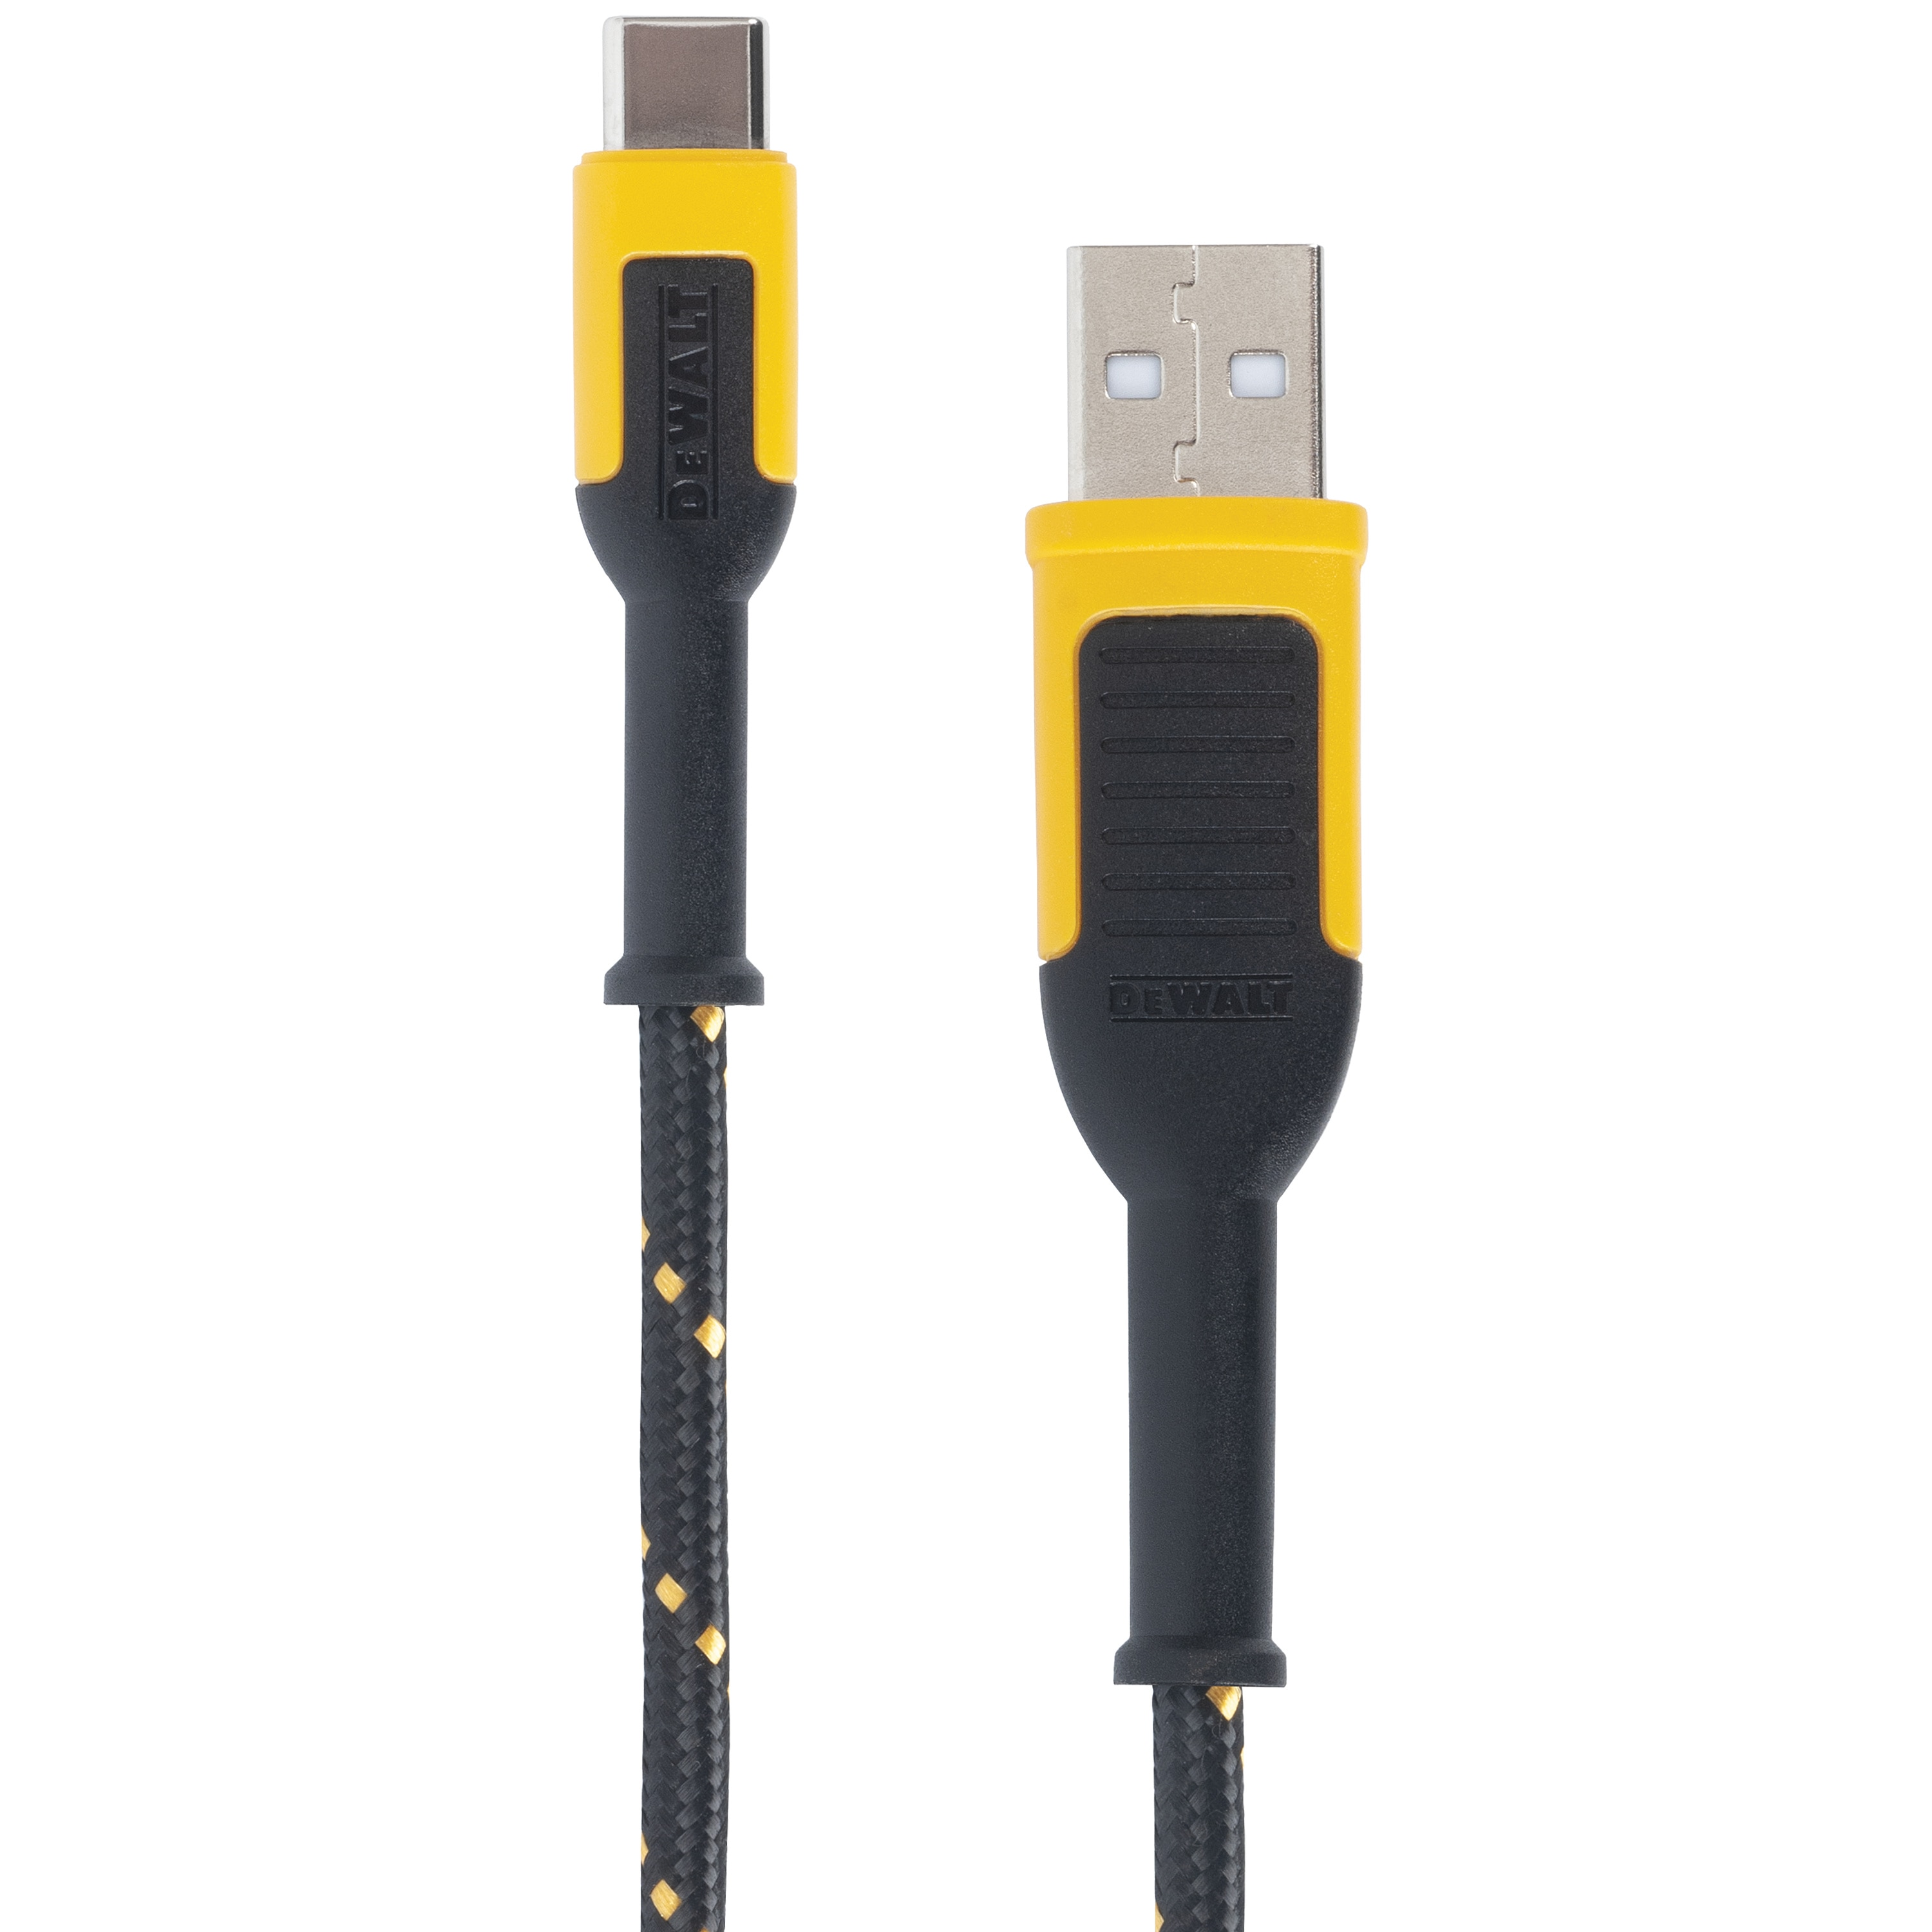 131 1361 DW2 Charger Cable, USB, USB-C, Kevlar Fiber Sheath, Black/Yellow Sheath, 4 ft L